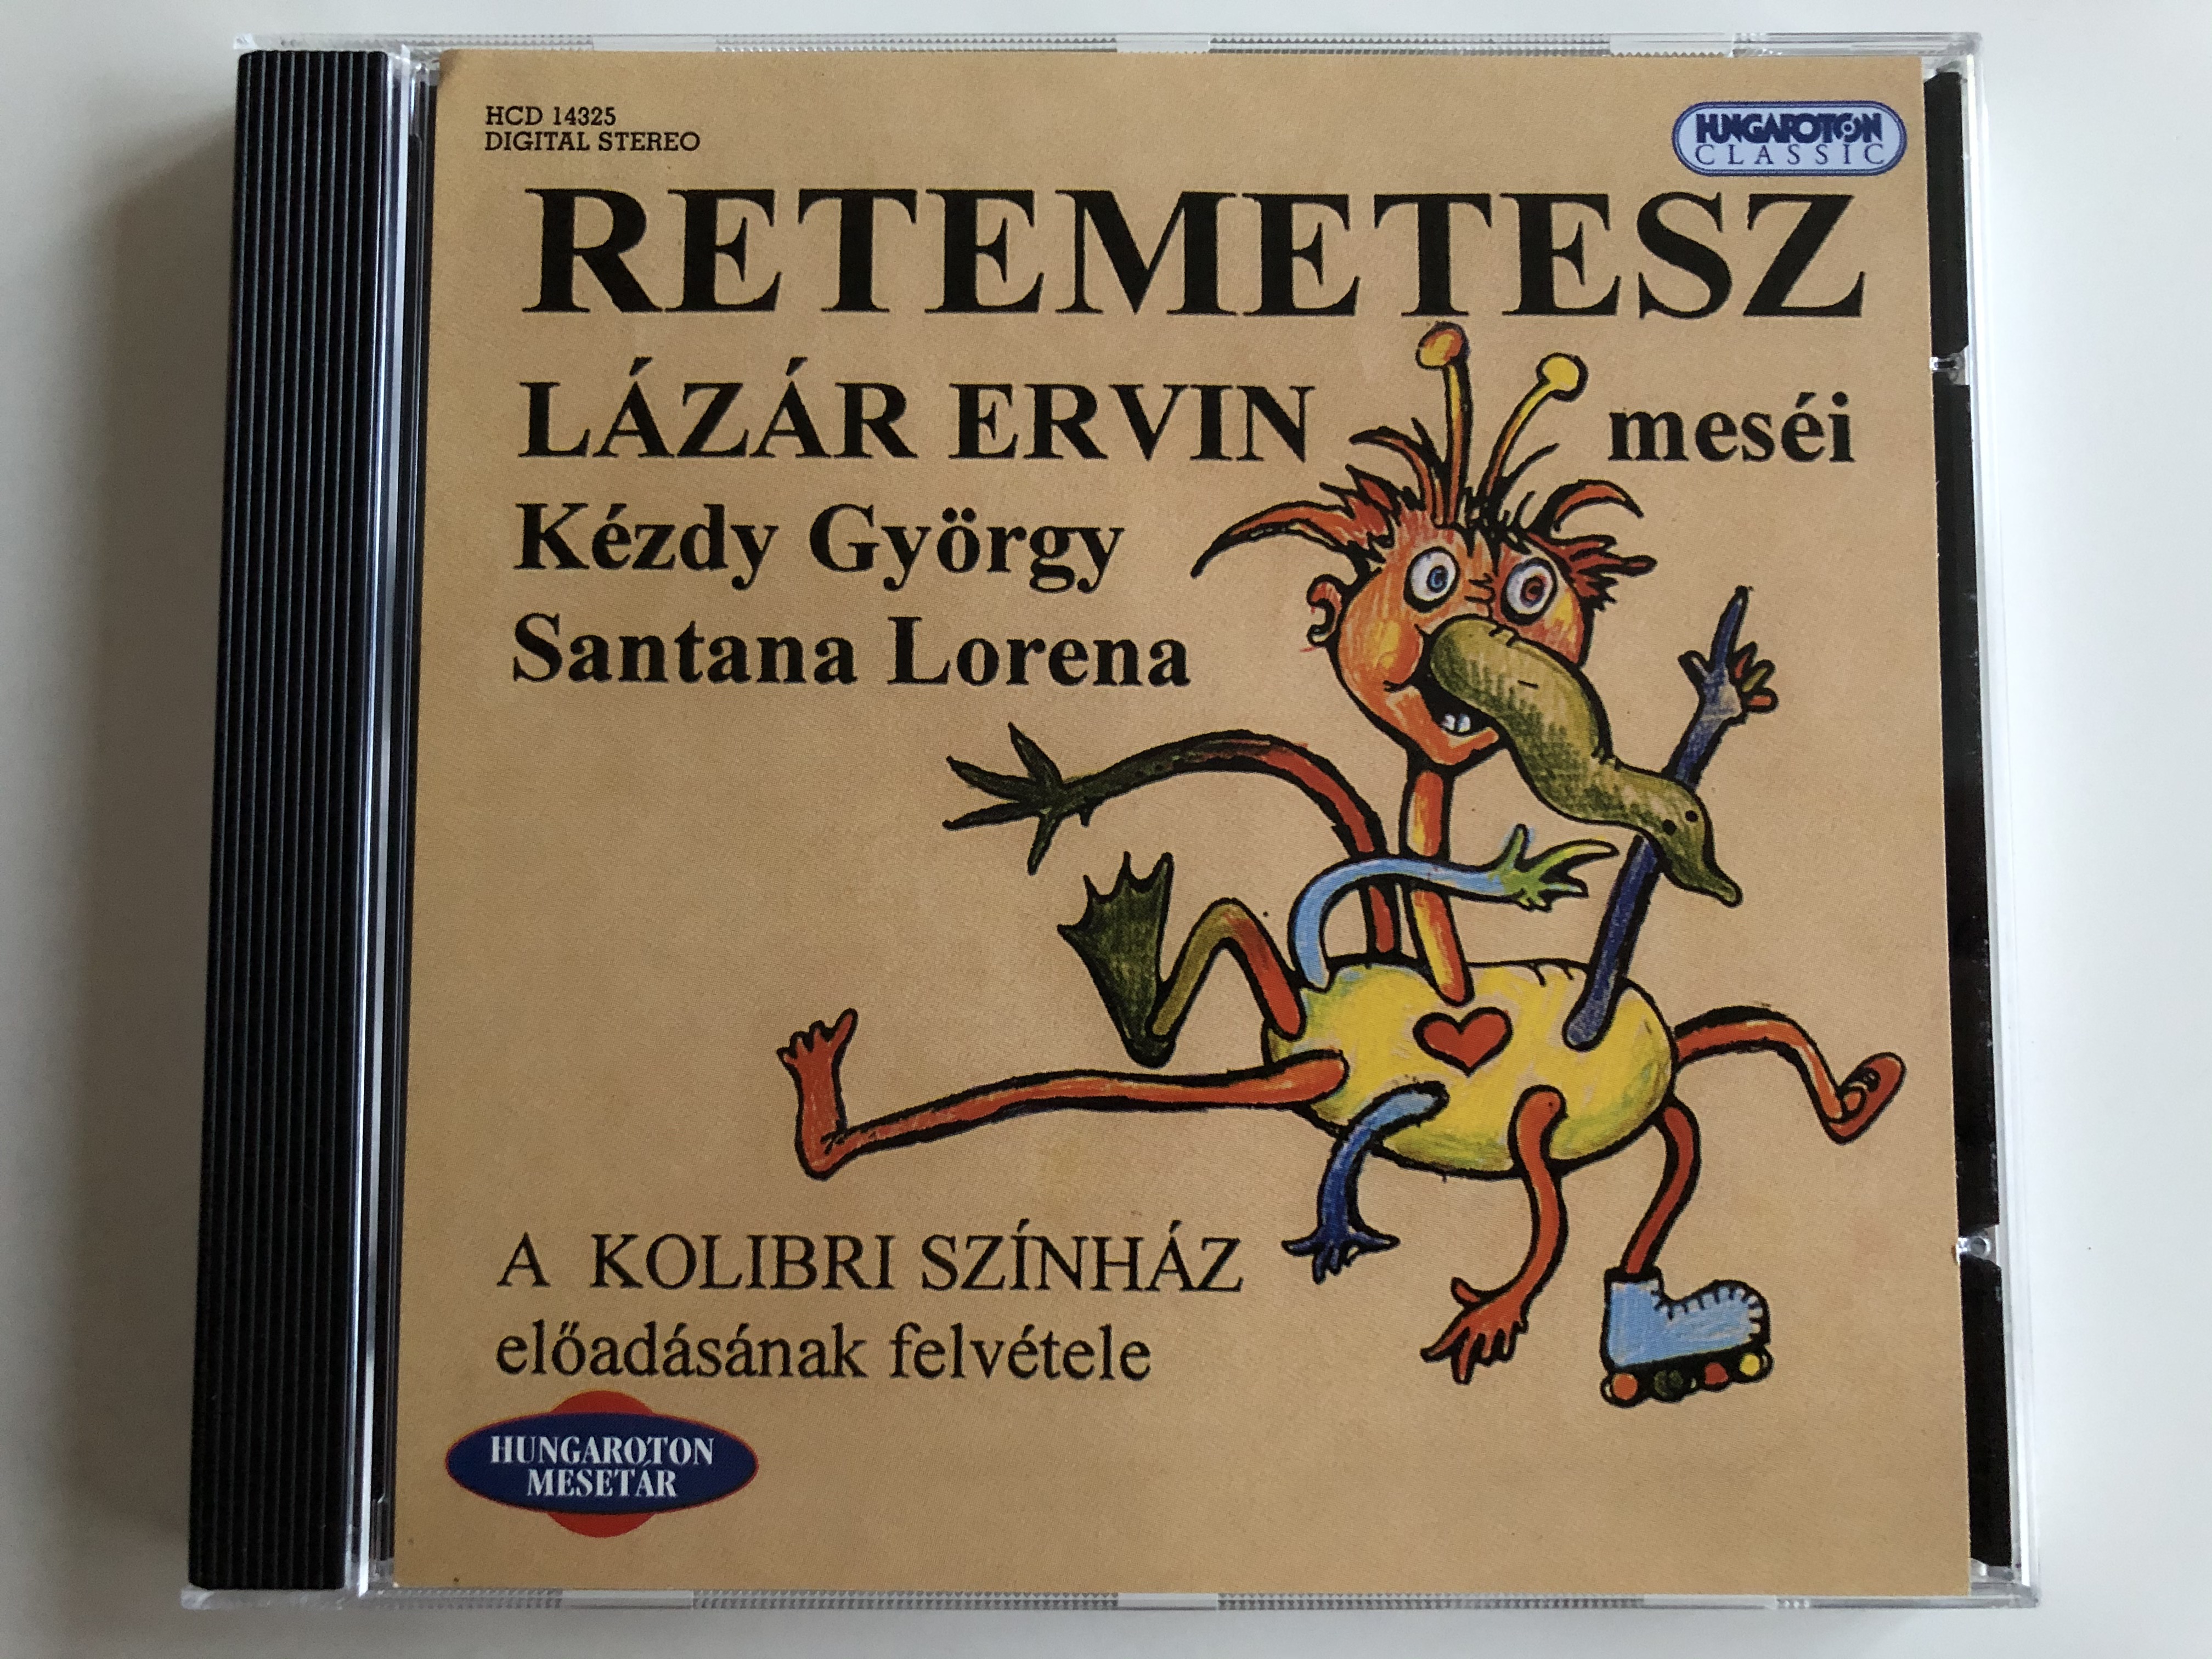 retemetesz-l-z-r-ervin-k-zdy-gy-rgy-santana-lorena-a-kolibri-sz-nh-z-hungaroton-classic-audio-cd-2004-stereo-hcd-14325-1-.jpg